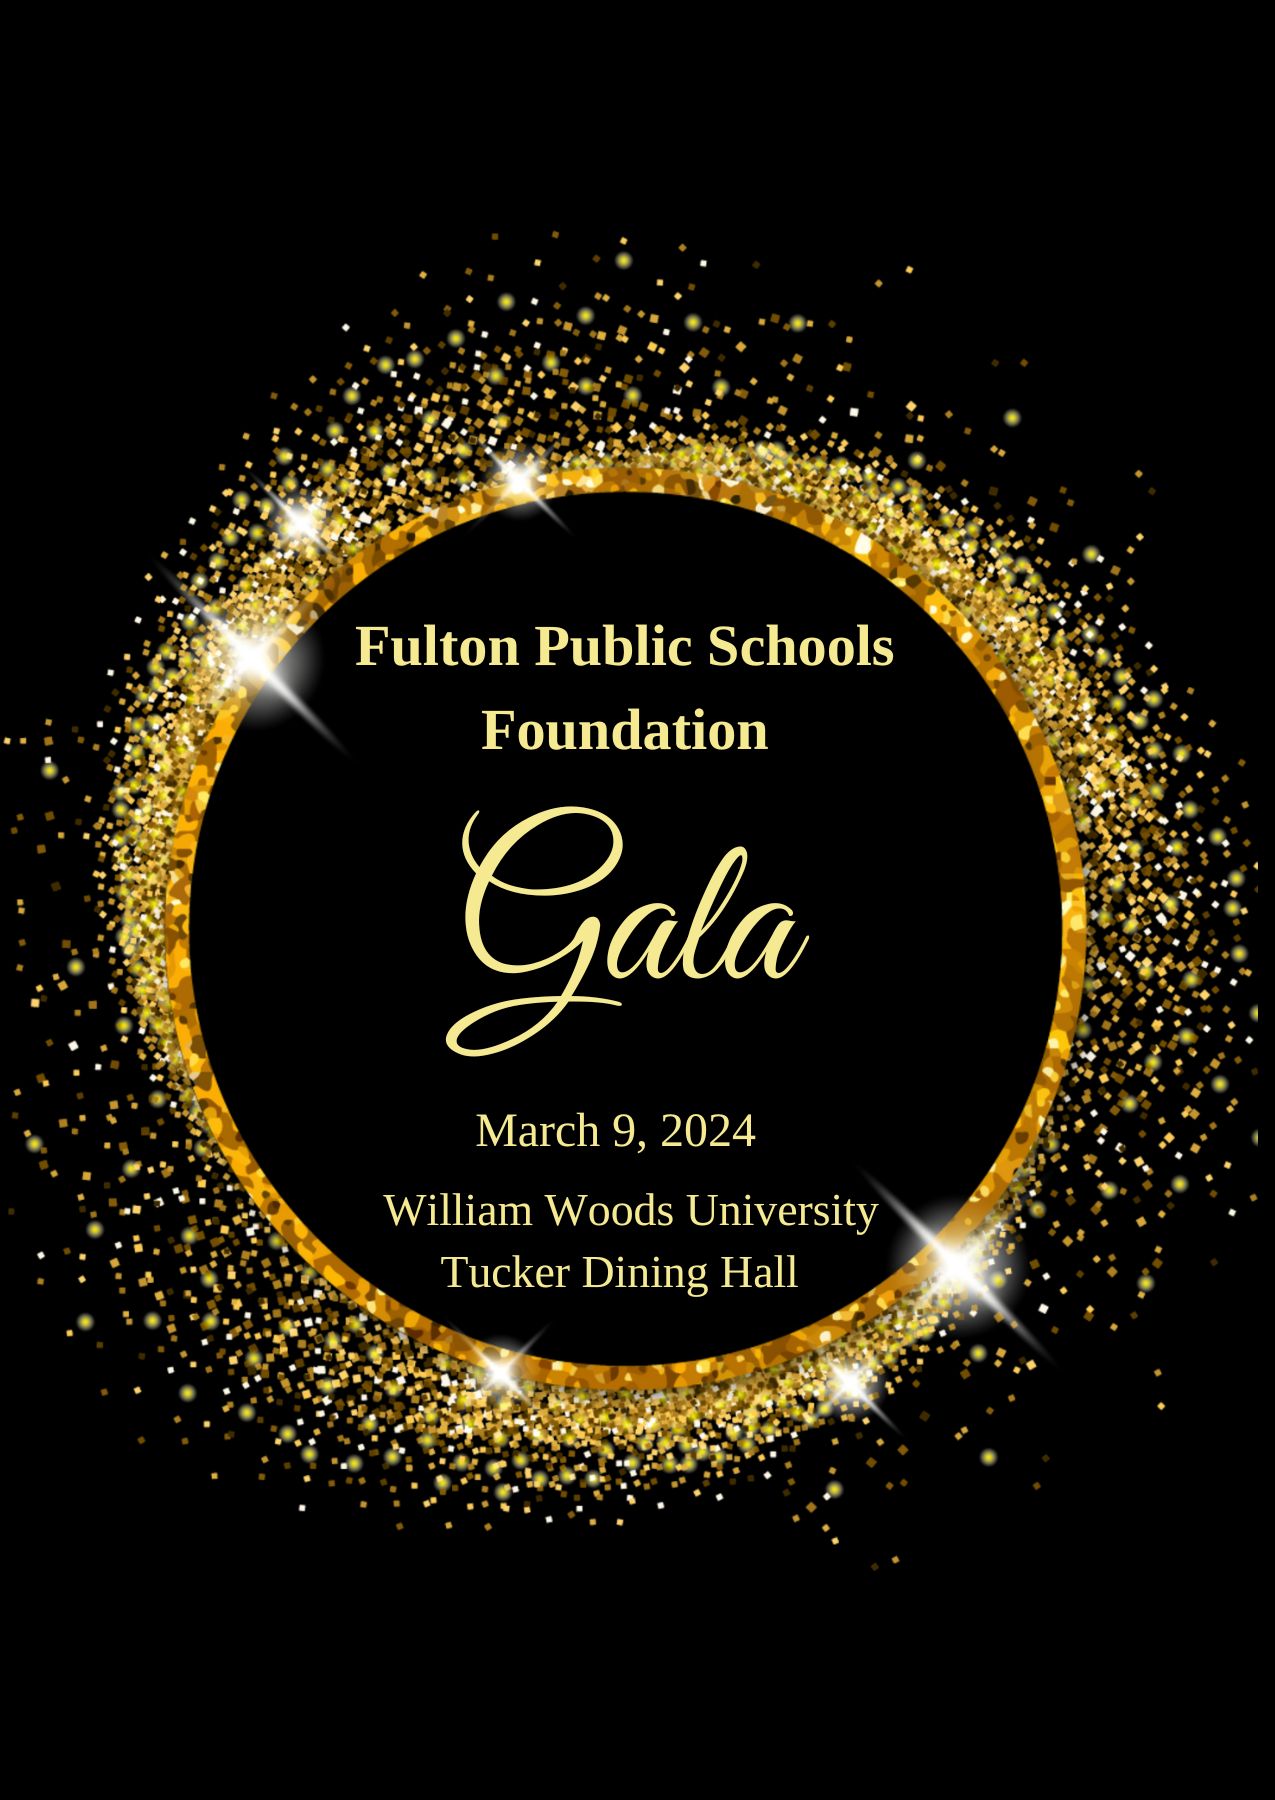 <h1 class="tribe-events-single-event-title">Fulton Public Schools Foundation 9th Annual Gala</h1>